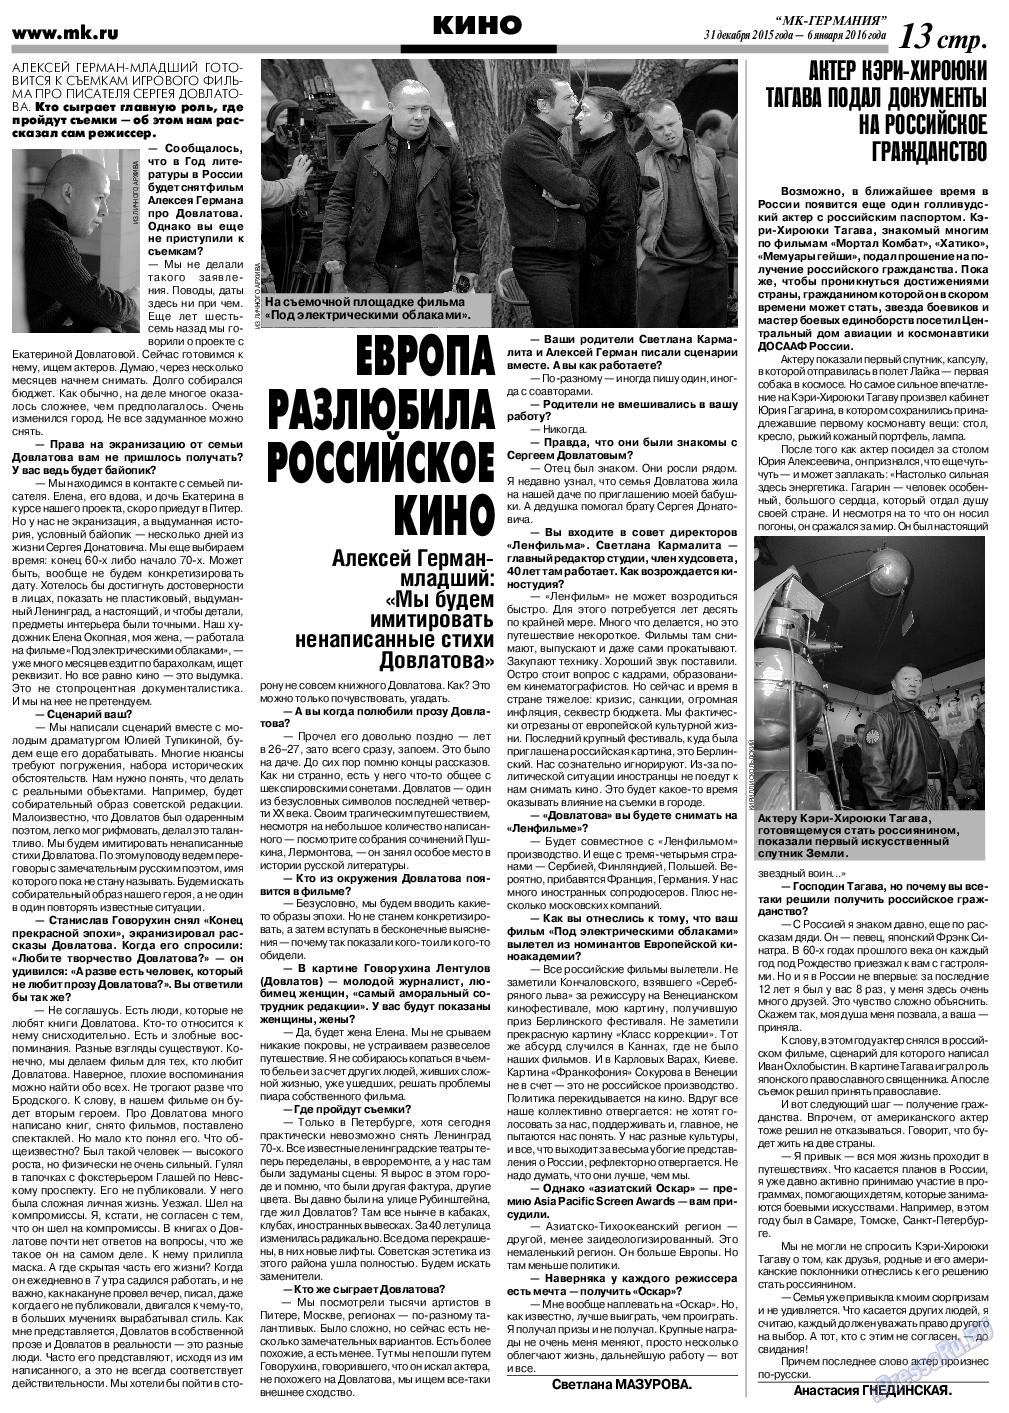 МК-Германия, газета. 2016 №1 стр.13